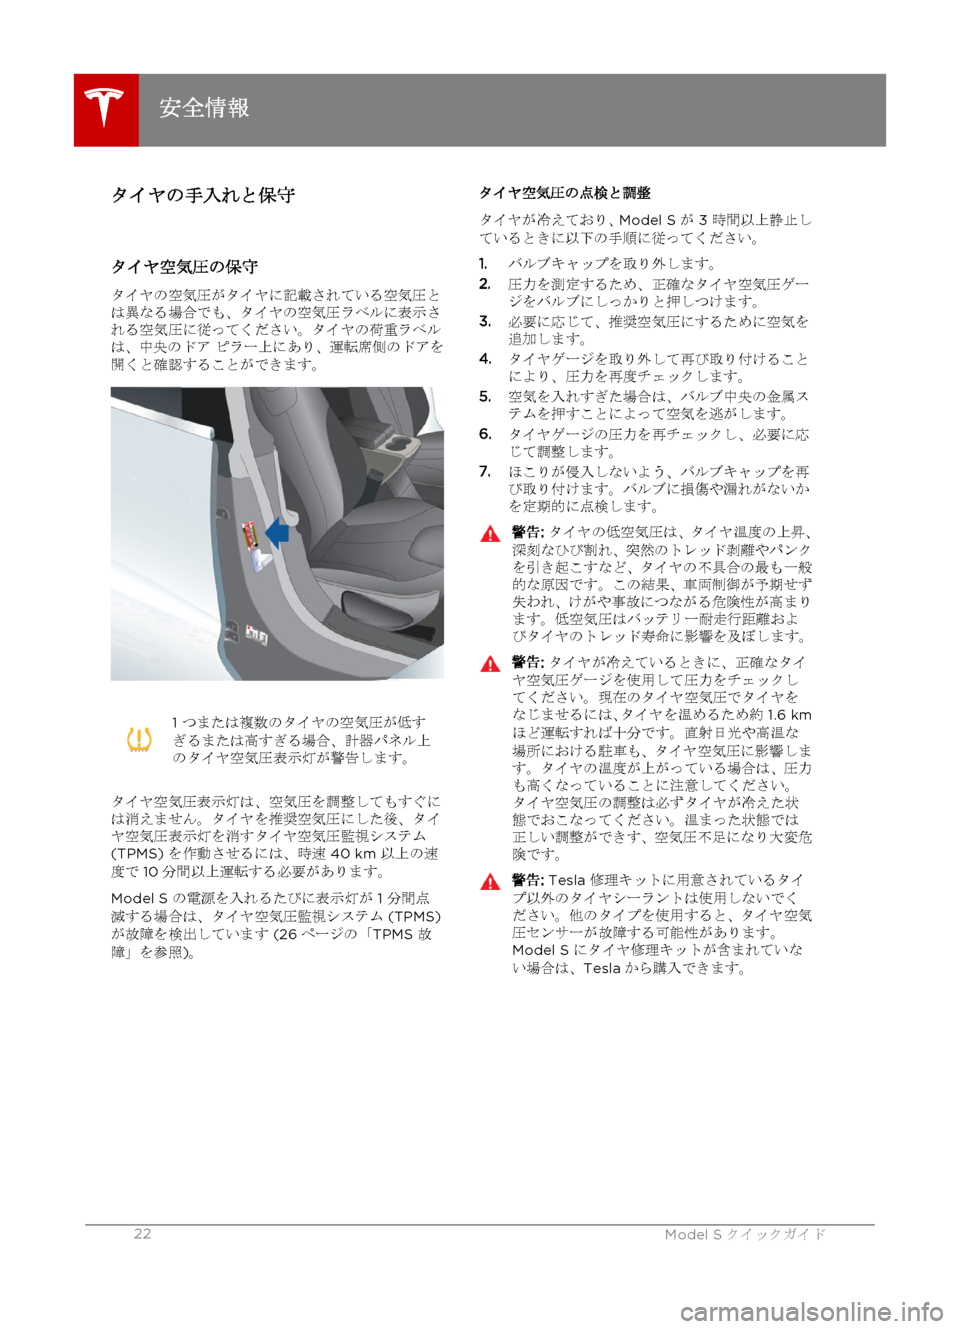 TESLA MODEL S 2015  クイックガイド (in Japanese) タイヤの手入れと保守
タイヤ空気圧の保守
タイヤの空気圧がタイヤに記載されている空気圧と
は異なる場合でも、タイヤの空気圧ラベルに表示さ
�